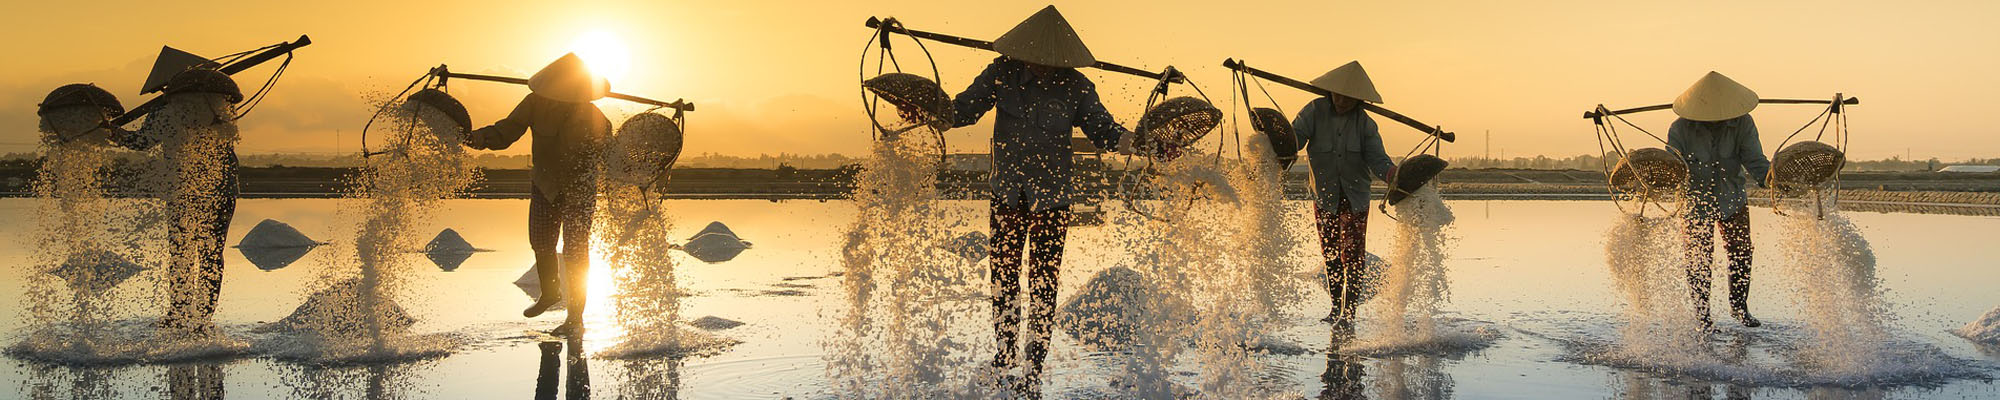 salt harvesting in Vietnam